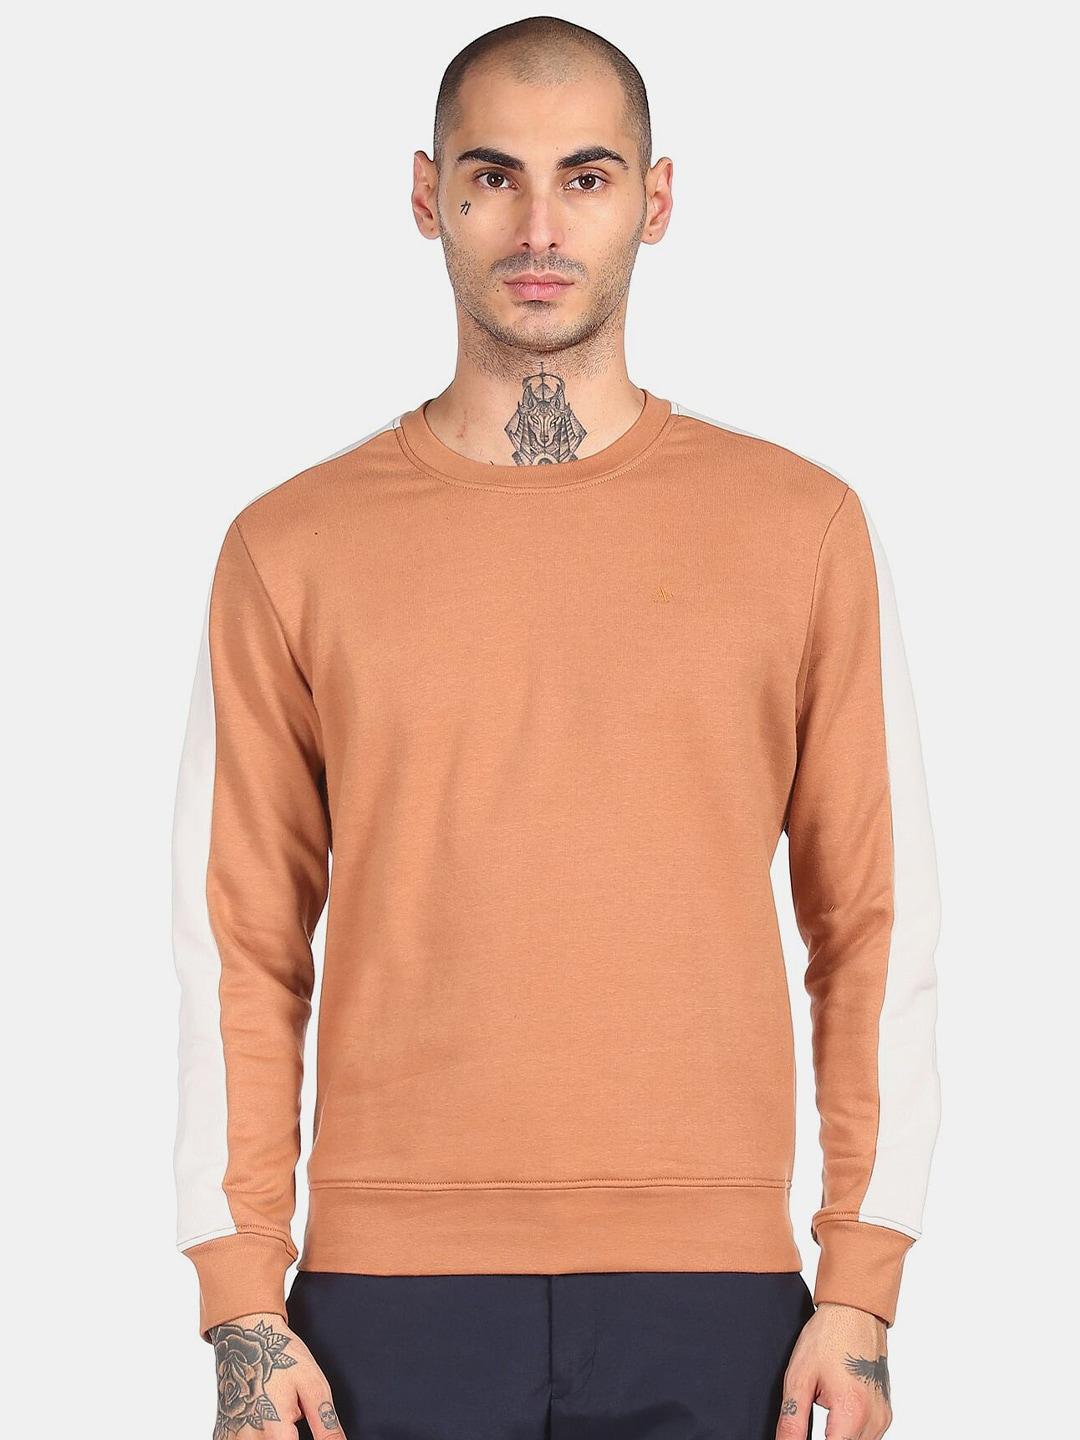 arrow-sport-men-brown-colourblocked-sweatshirt